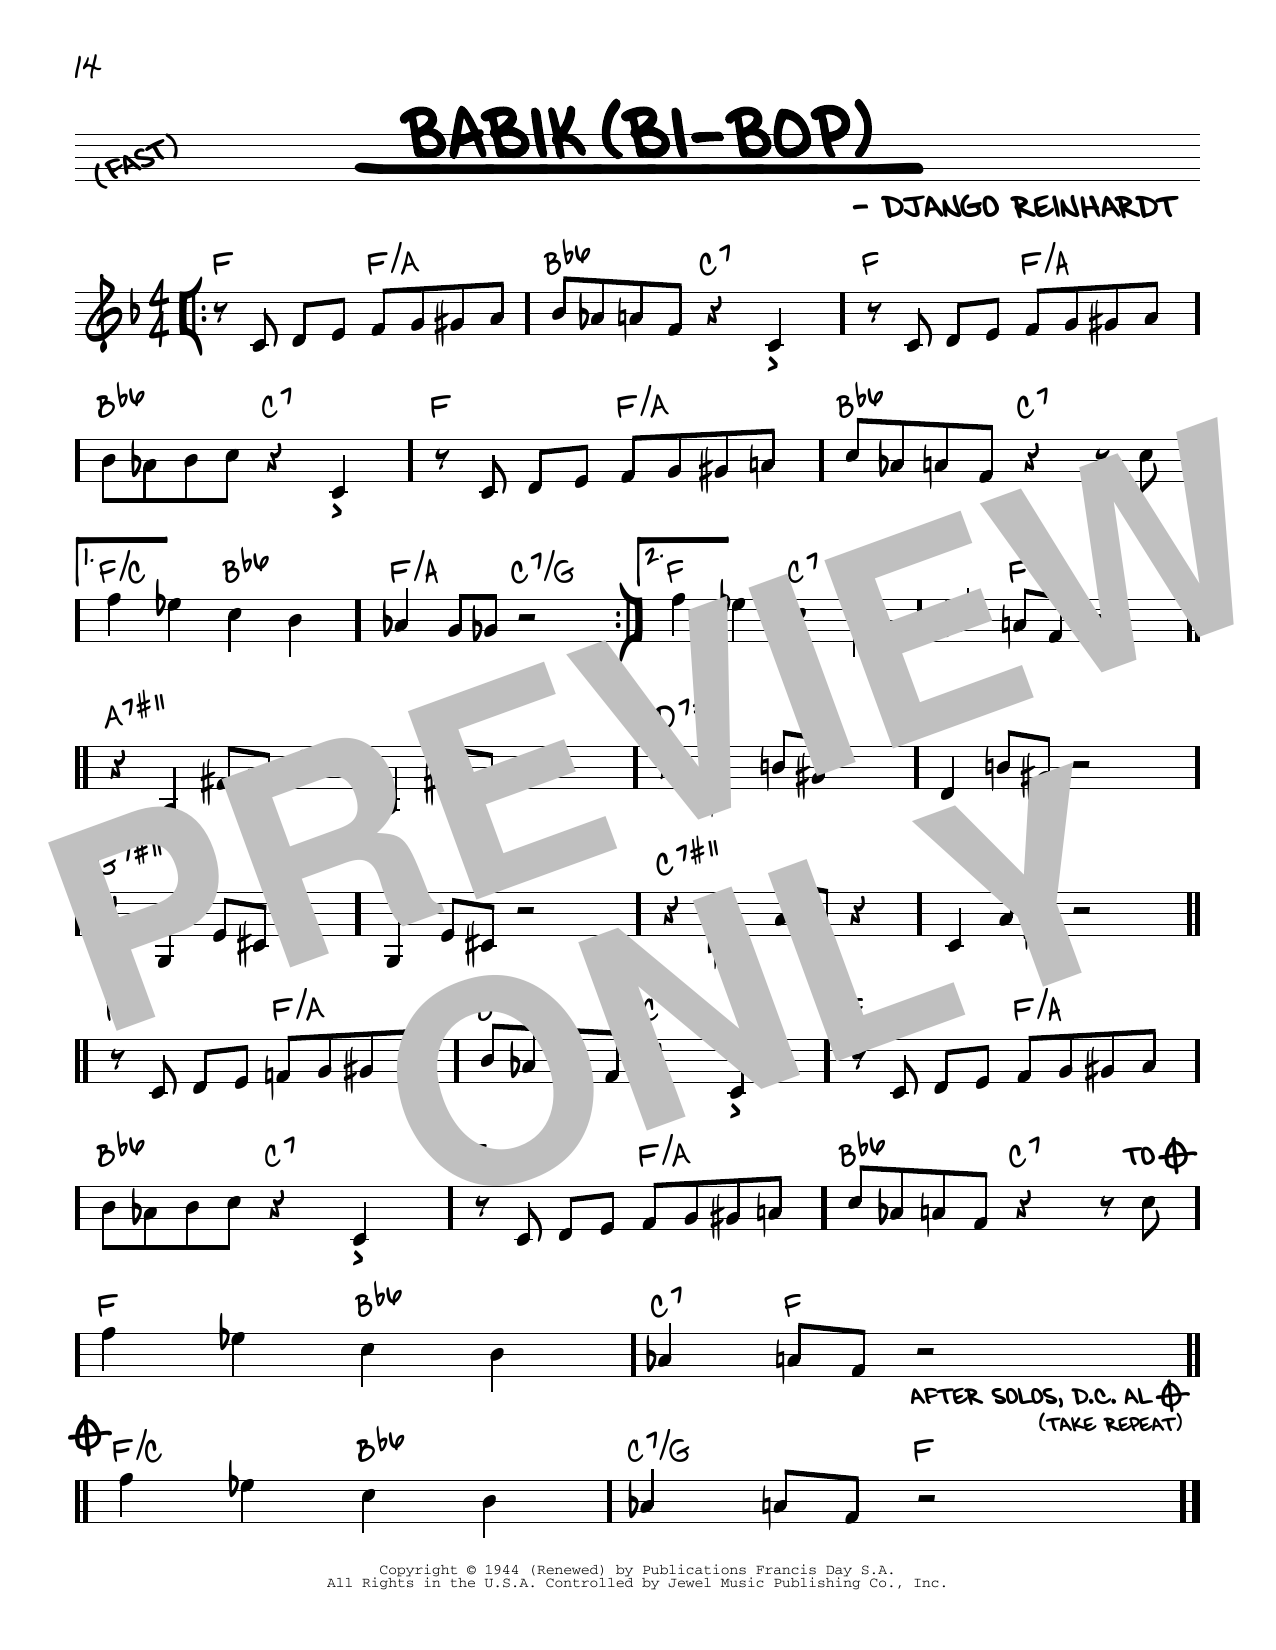 Django Reinhardt Babik (Bi-Bop) Sheet Music Notes & Chords for Real Book – Melody & Chords - Download or Print PDF